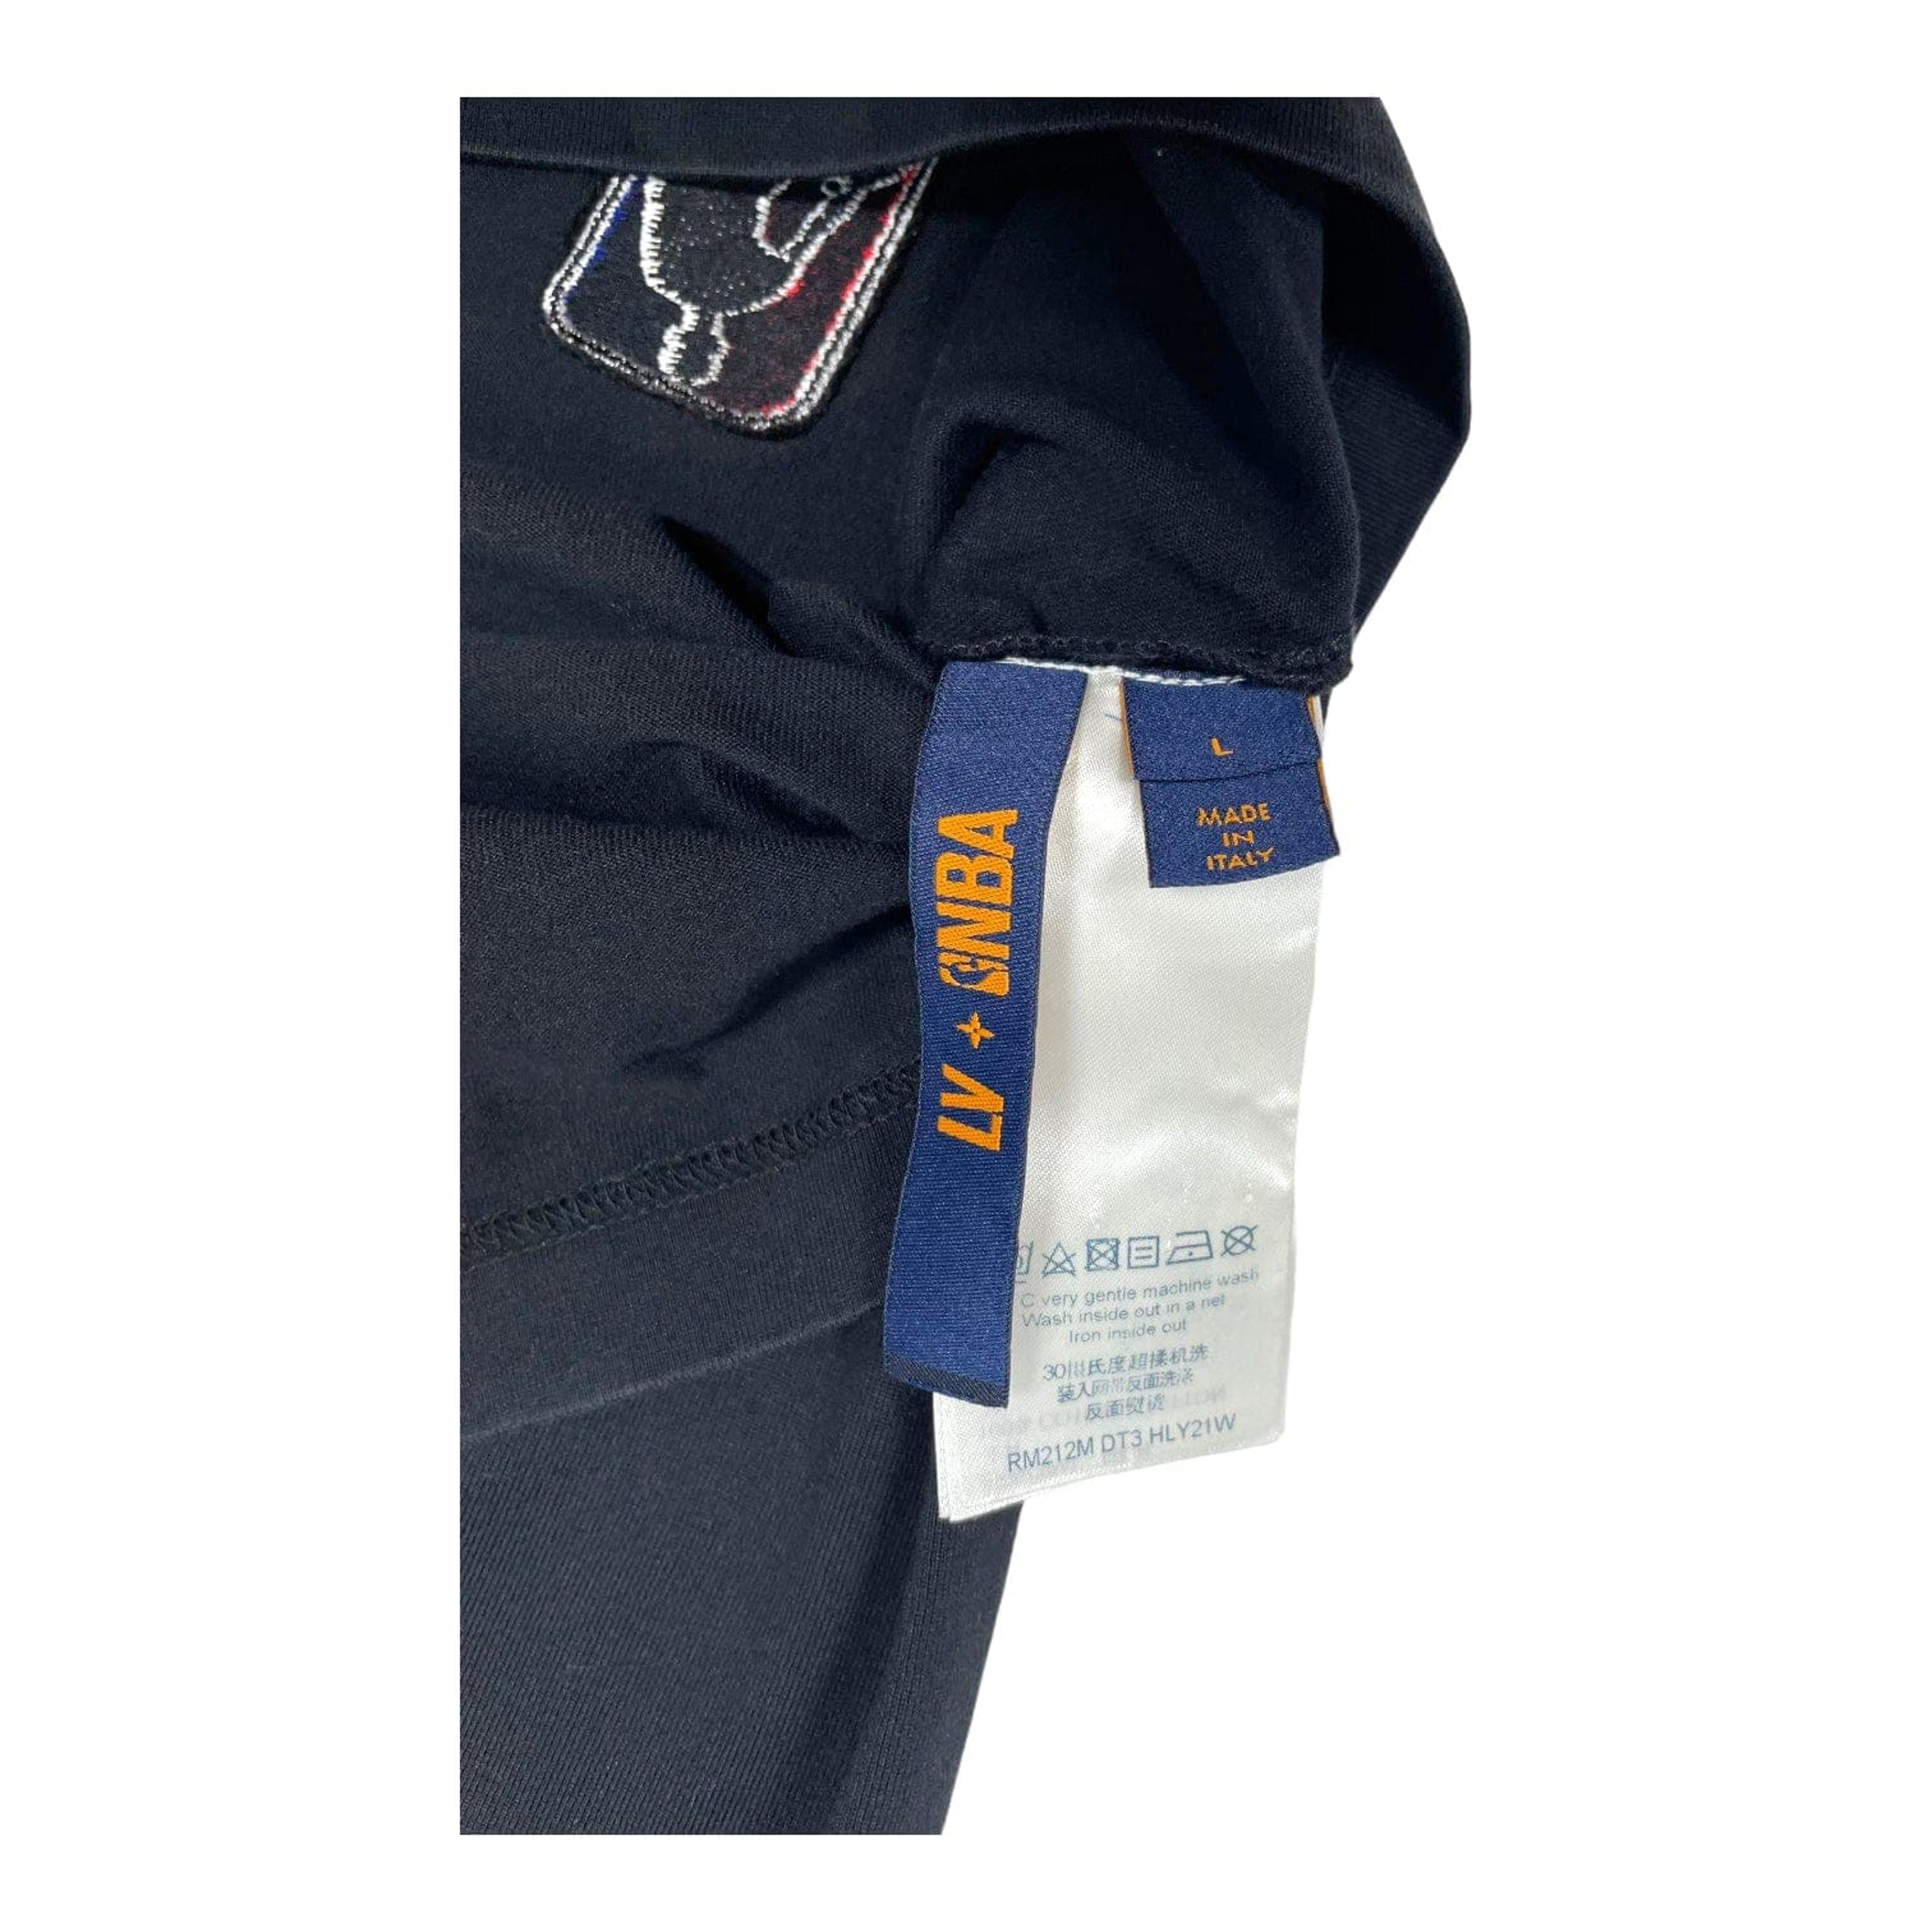 NTWRK - Louis Vuitton x NBA Multi Patch Logo Short Sleeve Tee Shirt Blac